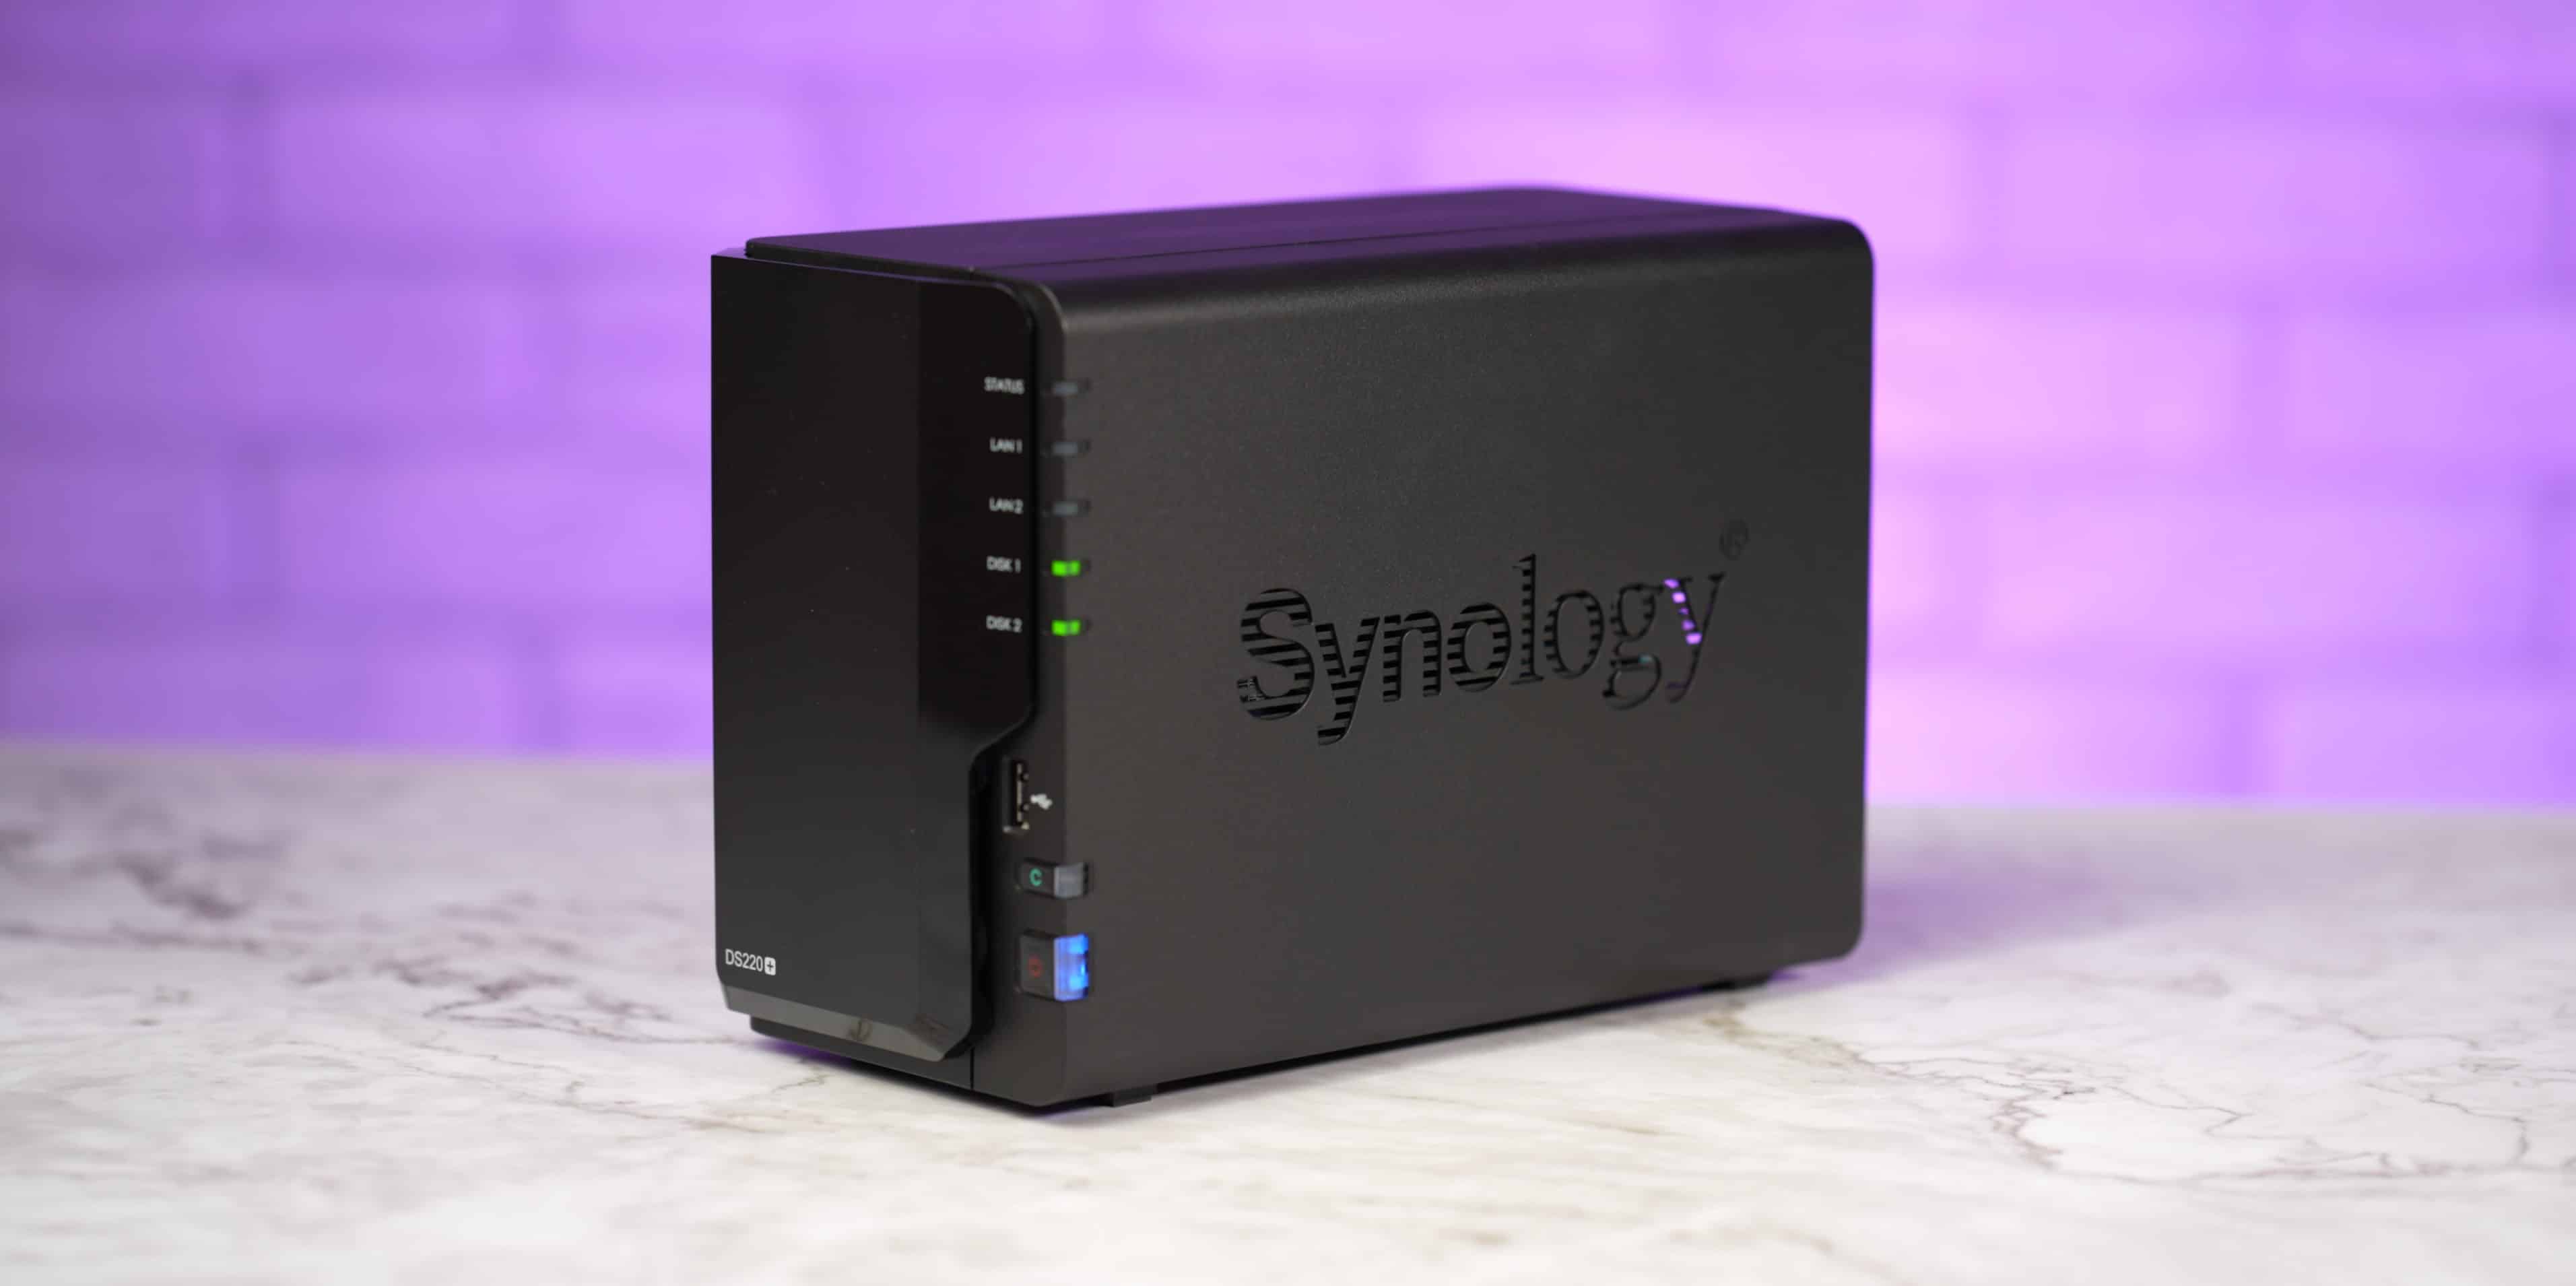 Synology DS220+ Greek, Synology DS220+ hands-on: Αυτό που θέλεις για τα δεδομένα σου